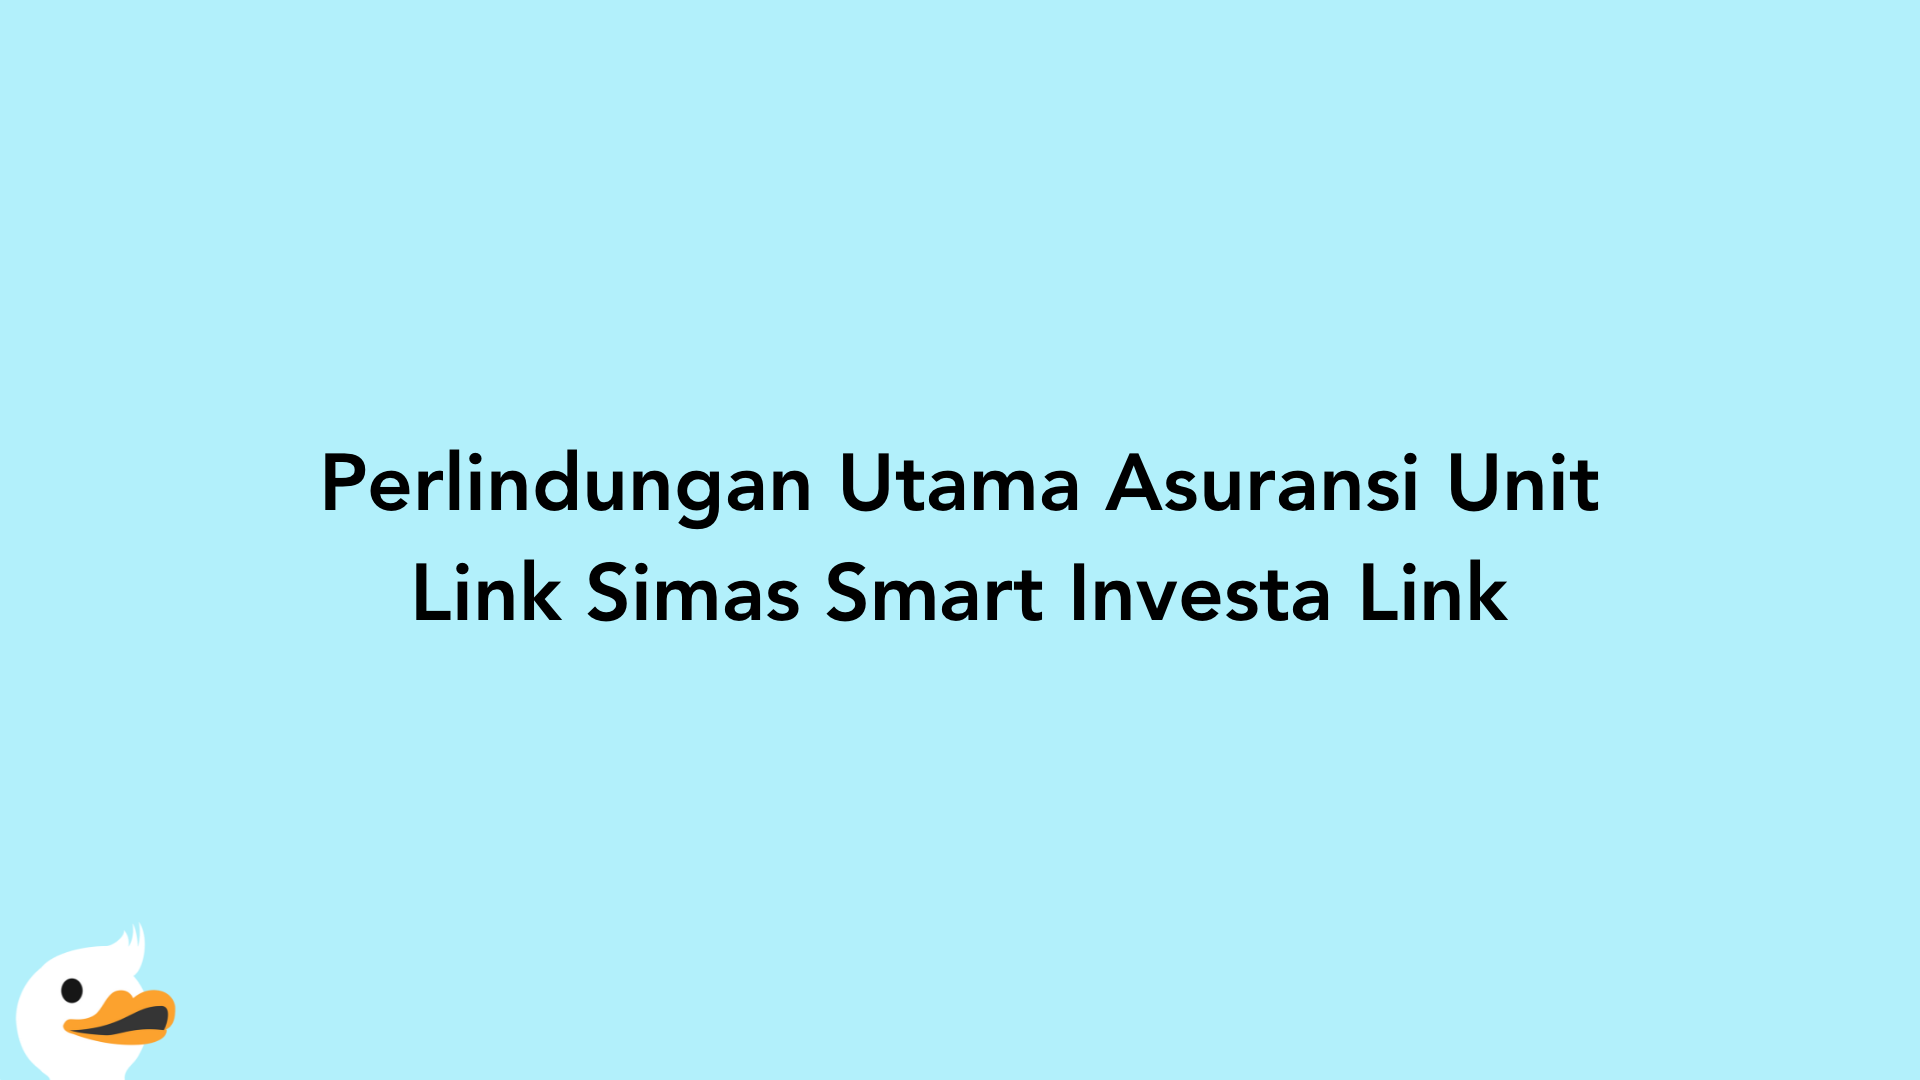 Perlindungan Utama Asuransi Unit Link Simas Smart Investa Link